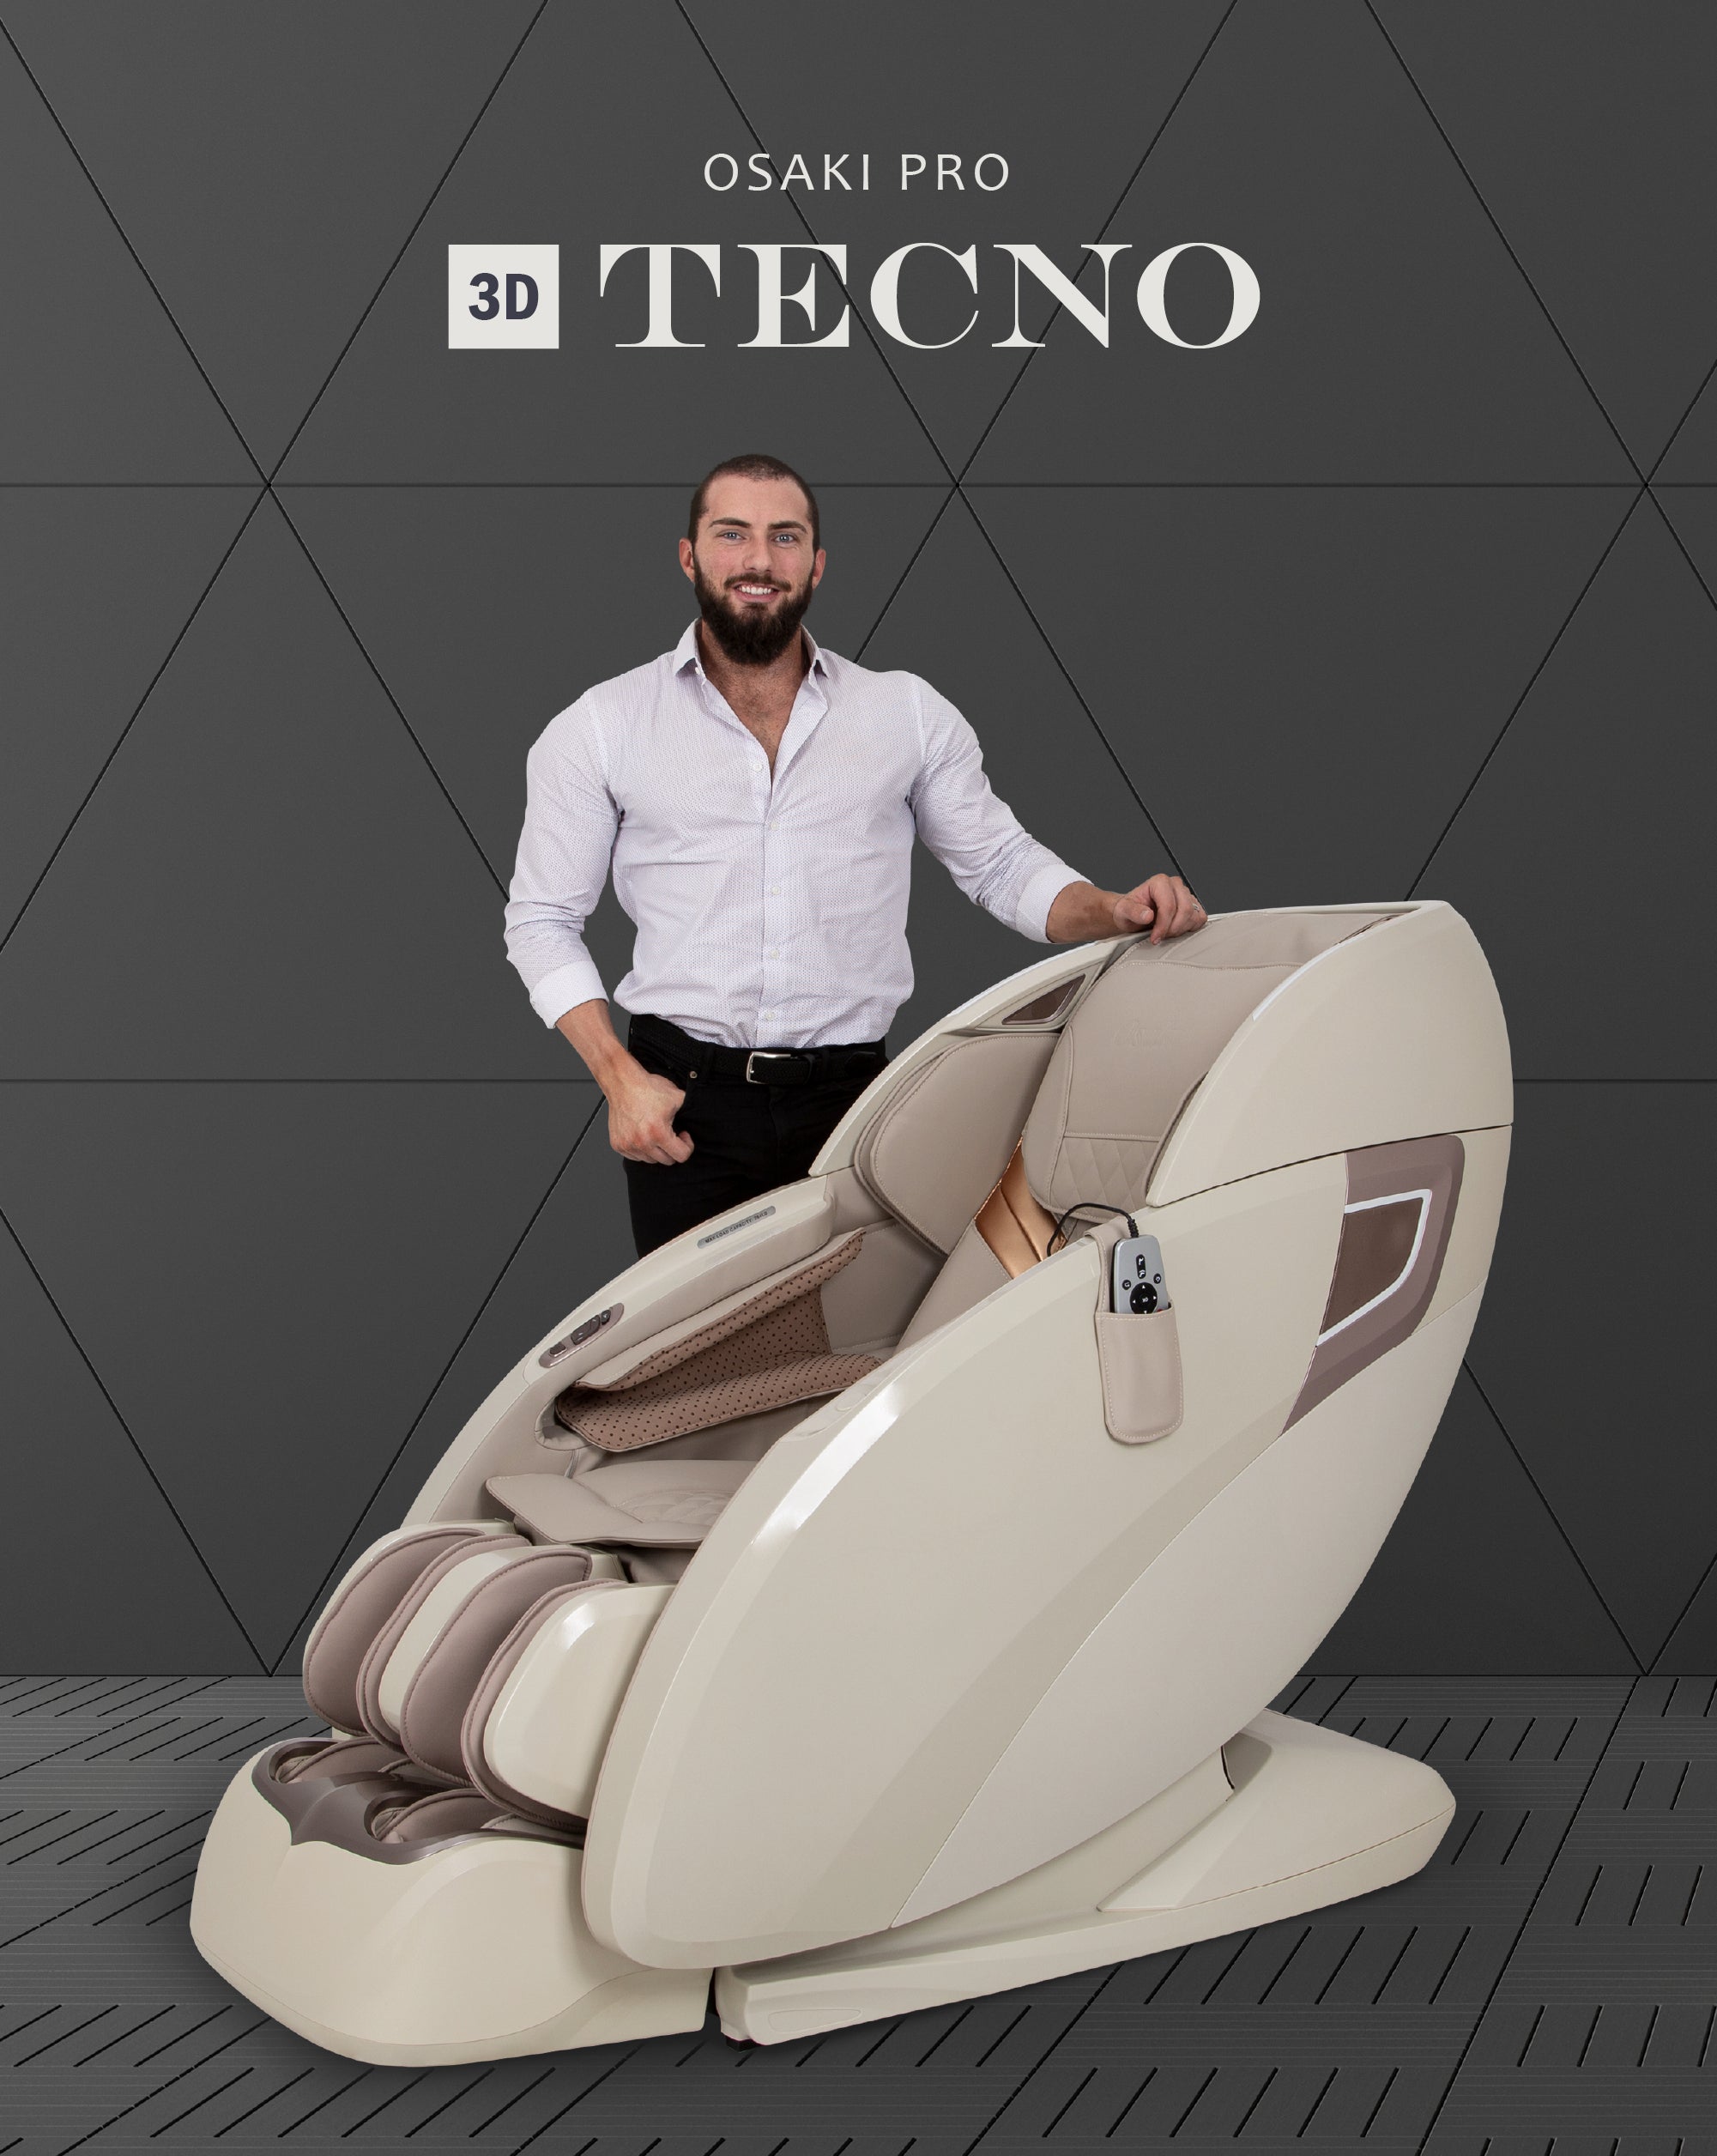 Osaki OS-Pro 3D Tecno Full Body Massage Chair, Overview